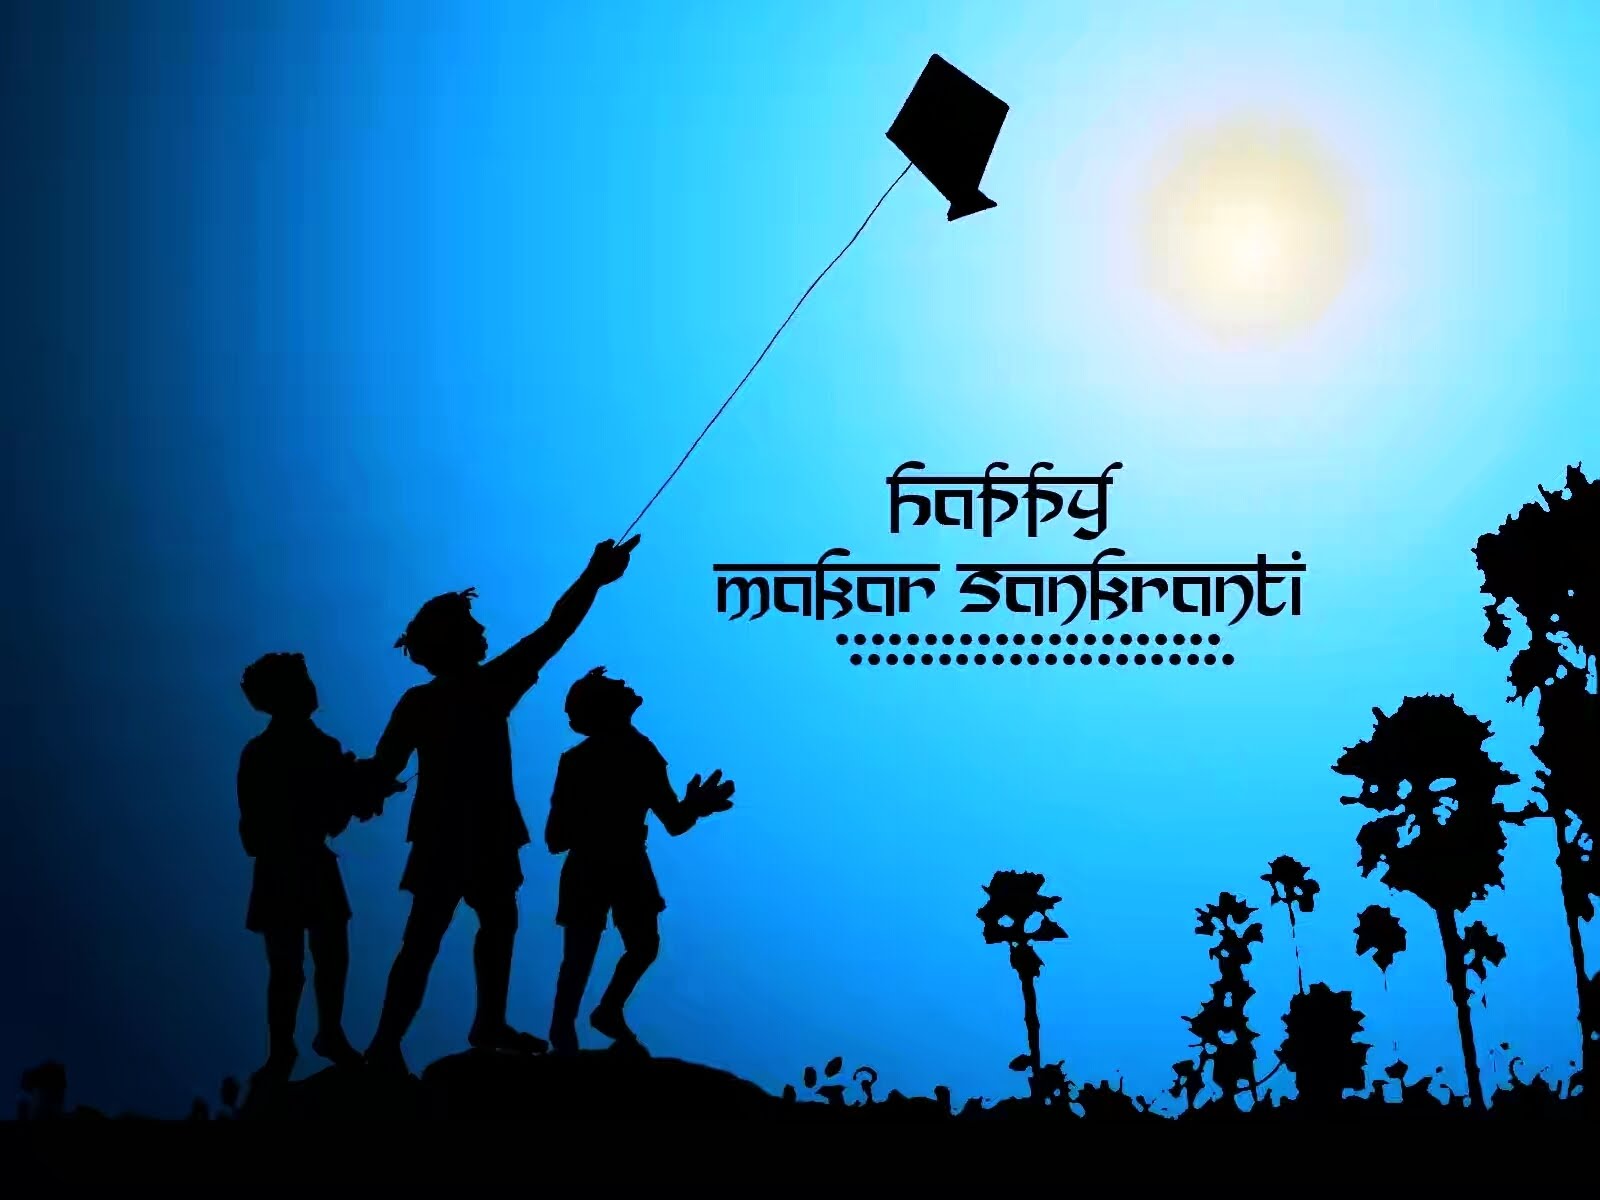 [Uttarayan] Happy Makar Sankranti Images, Wallpaper and HD Photo Gallery